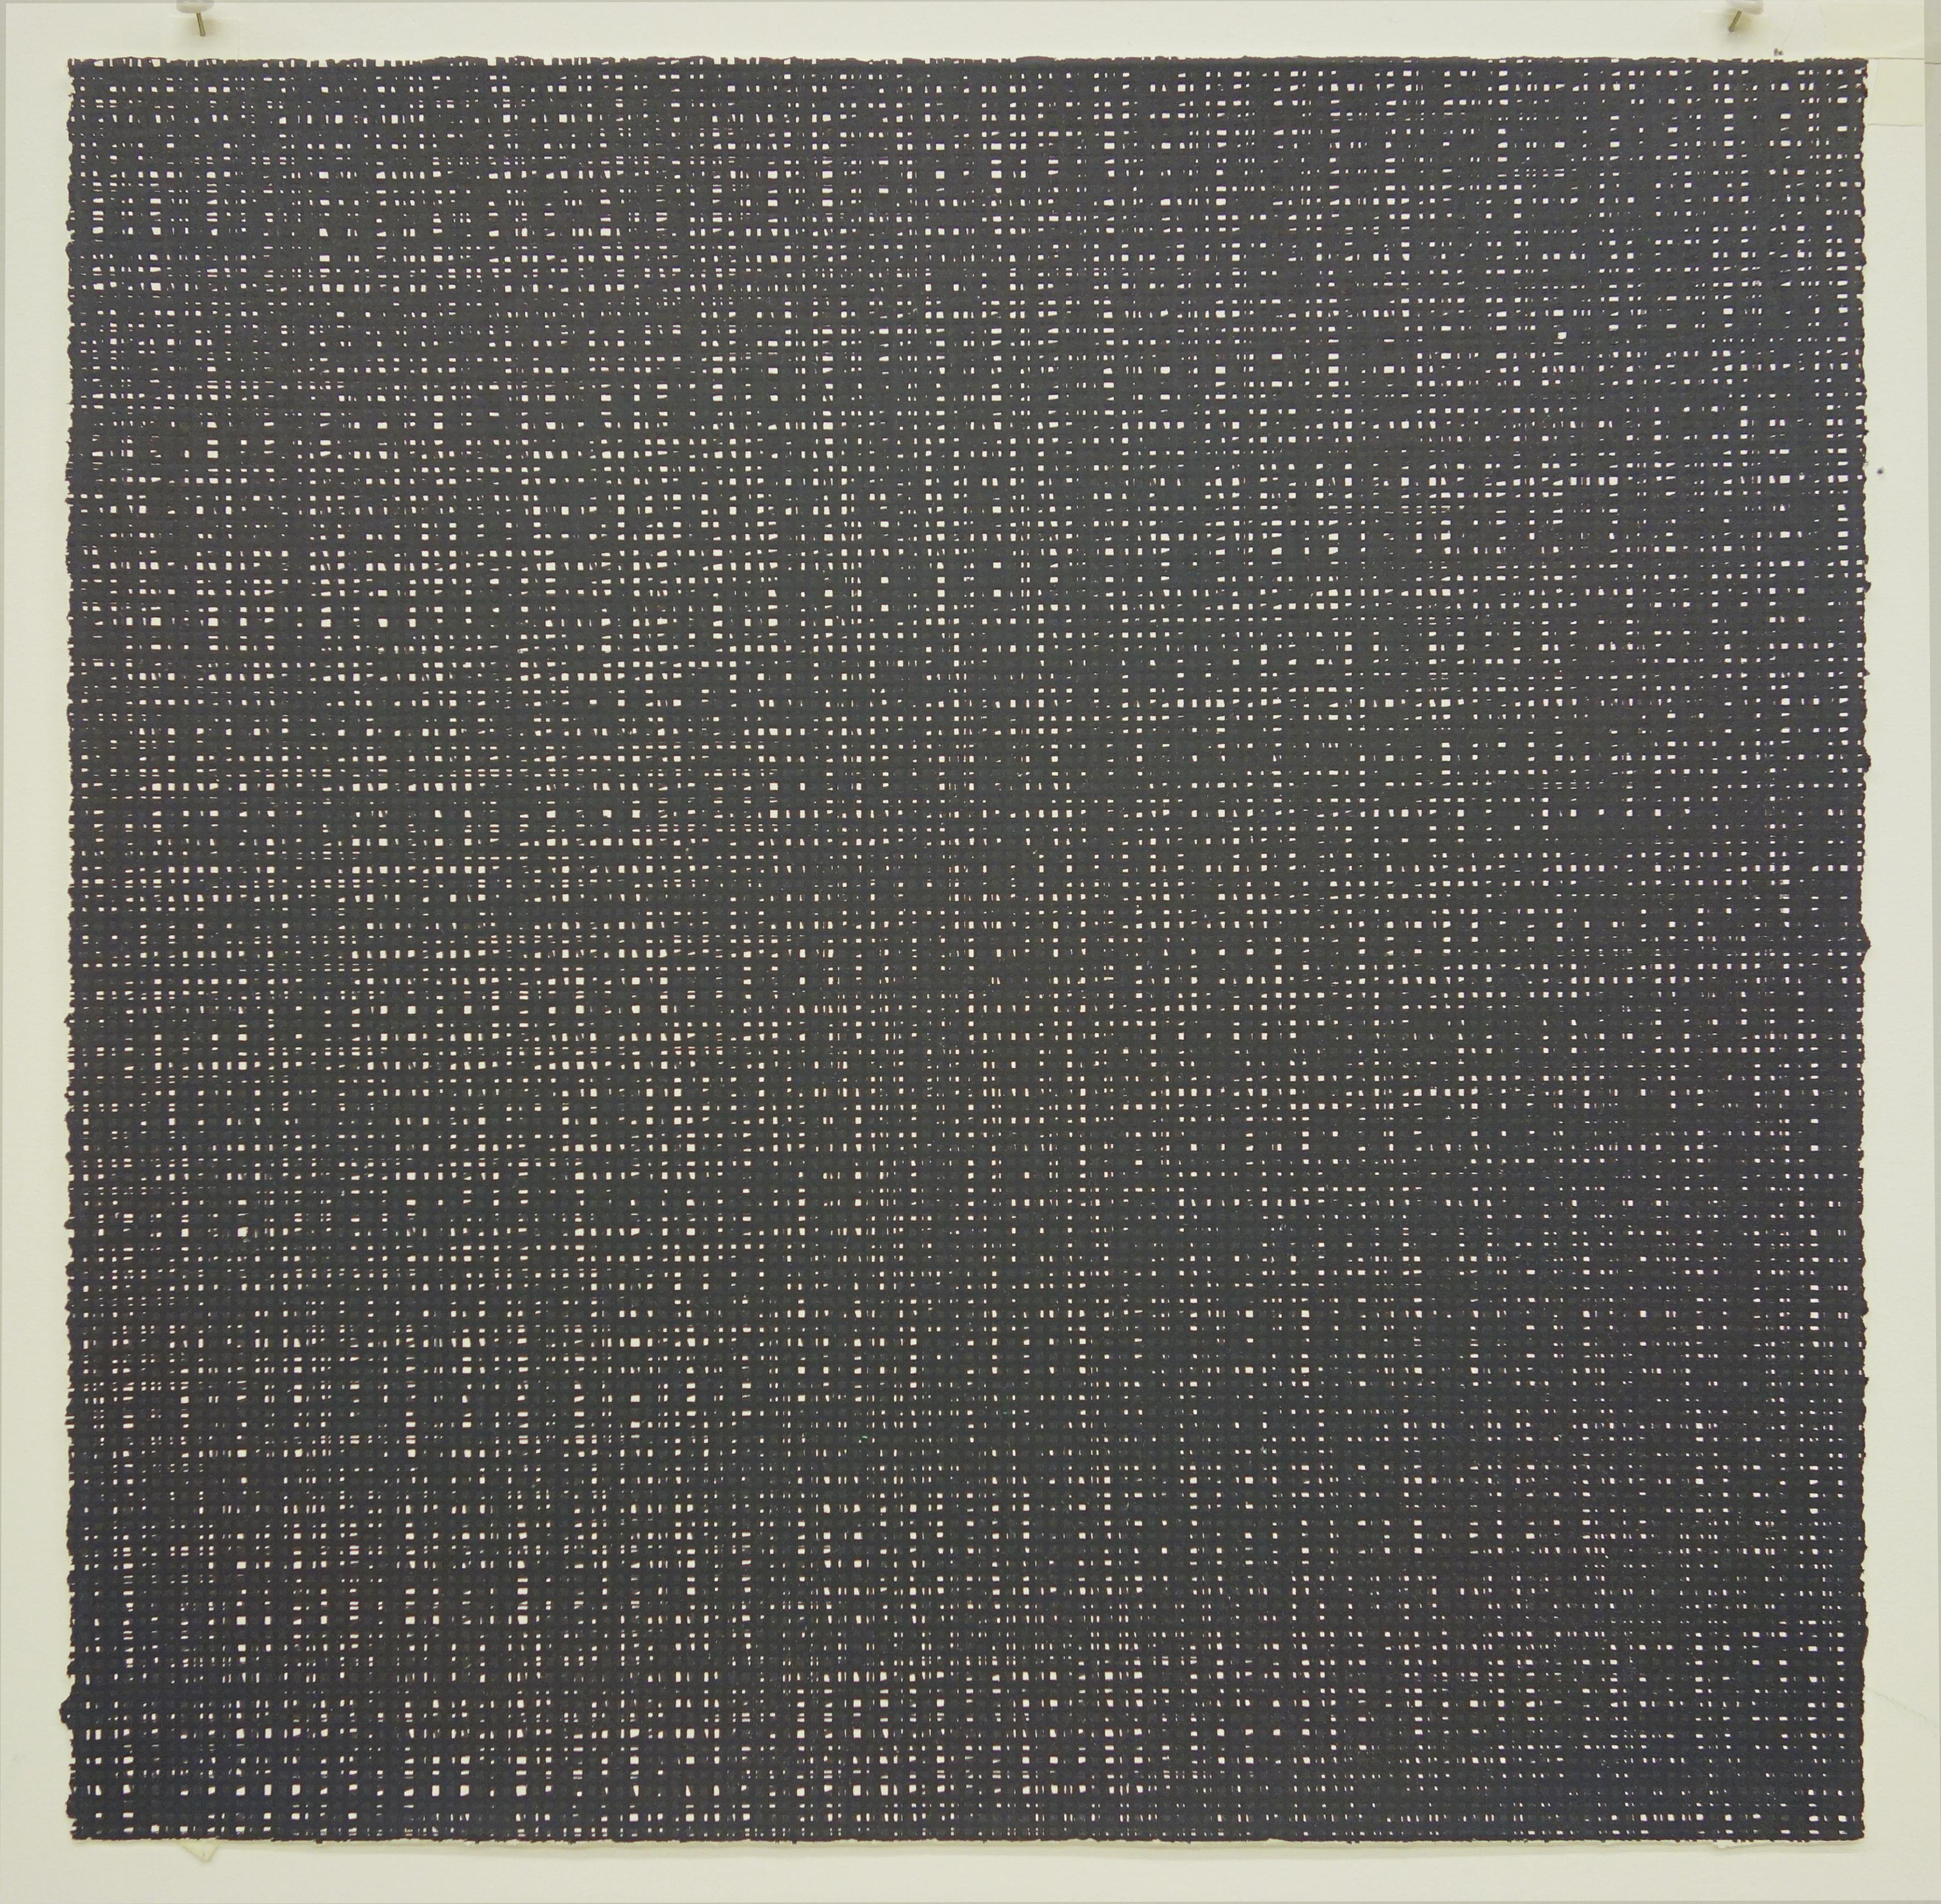 Rob de Oude, Untitled-Wassaic 1, 2016, silkscreen, 18 x 18 inches, Suite of 10 3